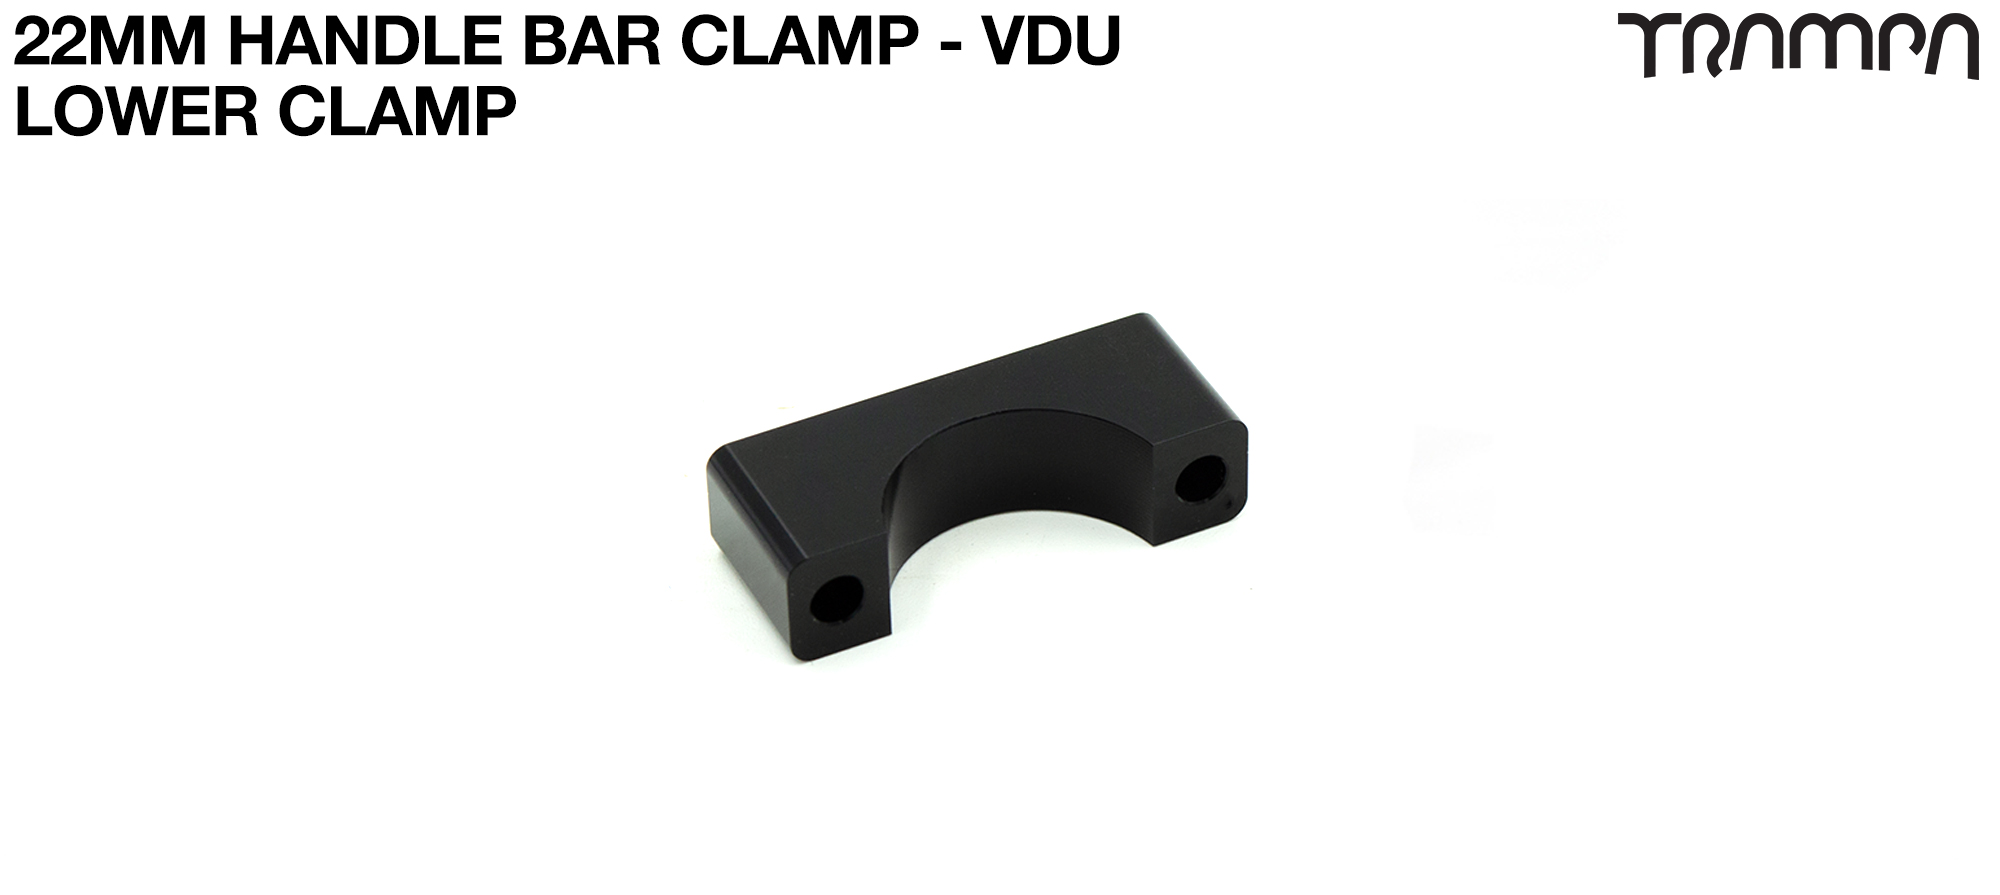 VESC DISPLAY UNIT - Lower Clamp for 22mm Handle Bars